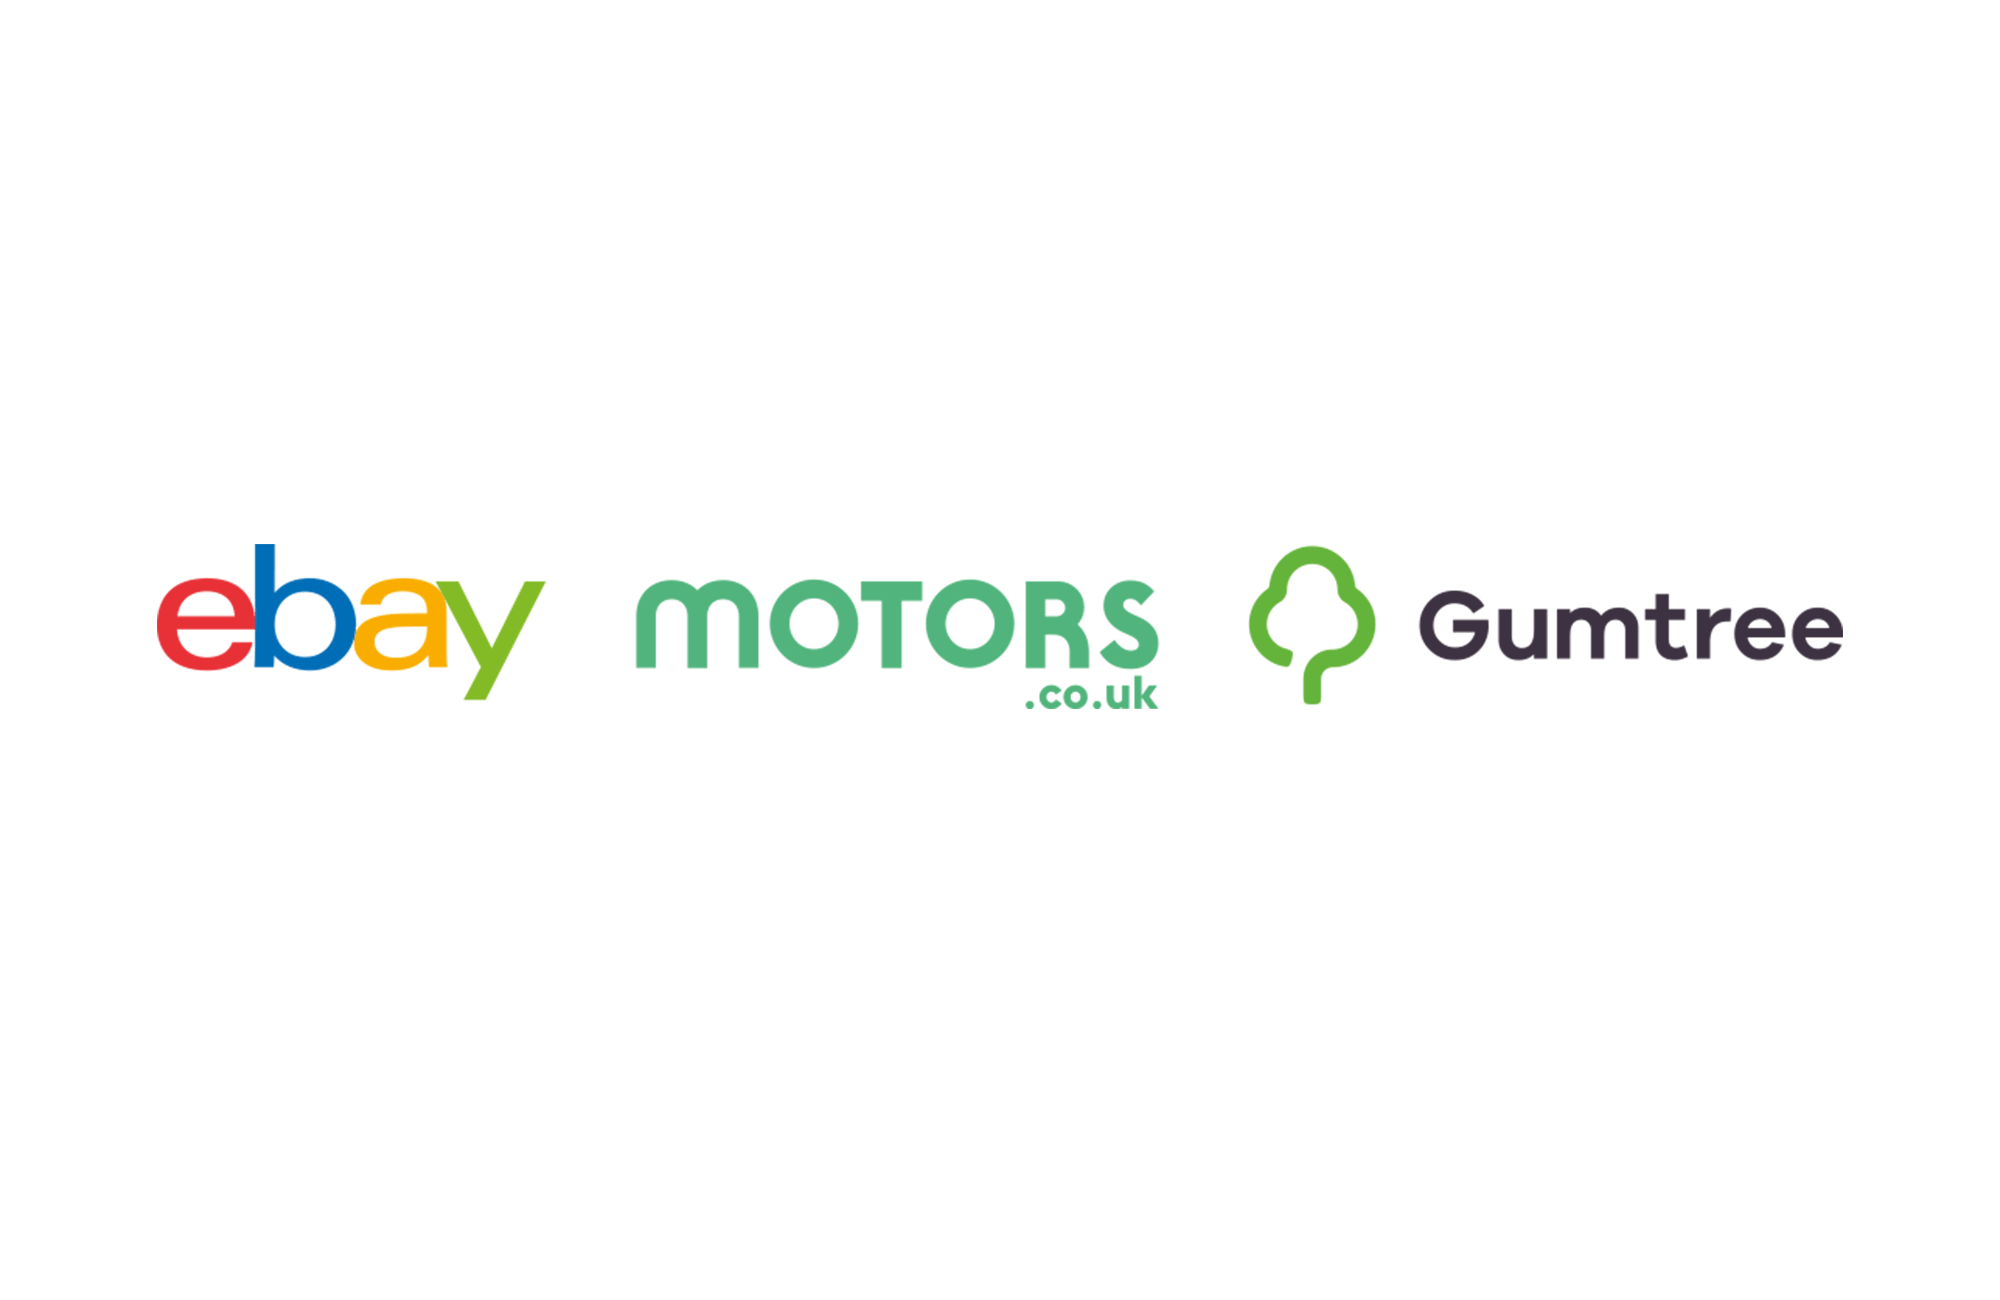 eBay Motors Logo - Motors.co.uk acquired by eBay - Motors.co.uk